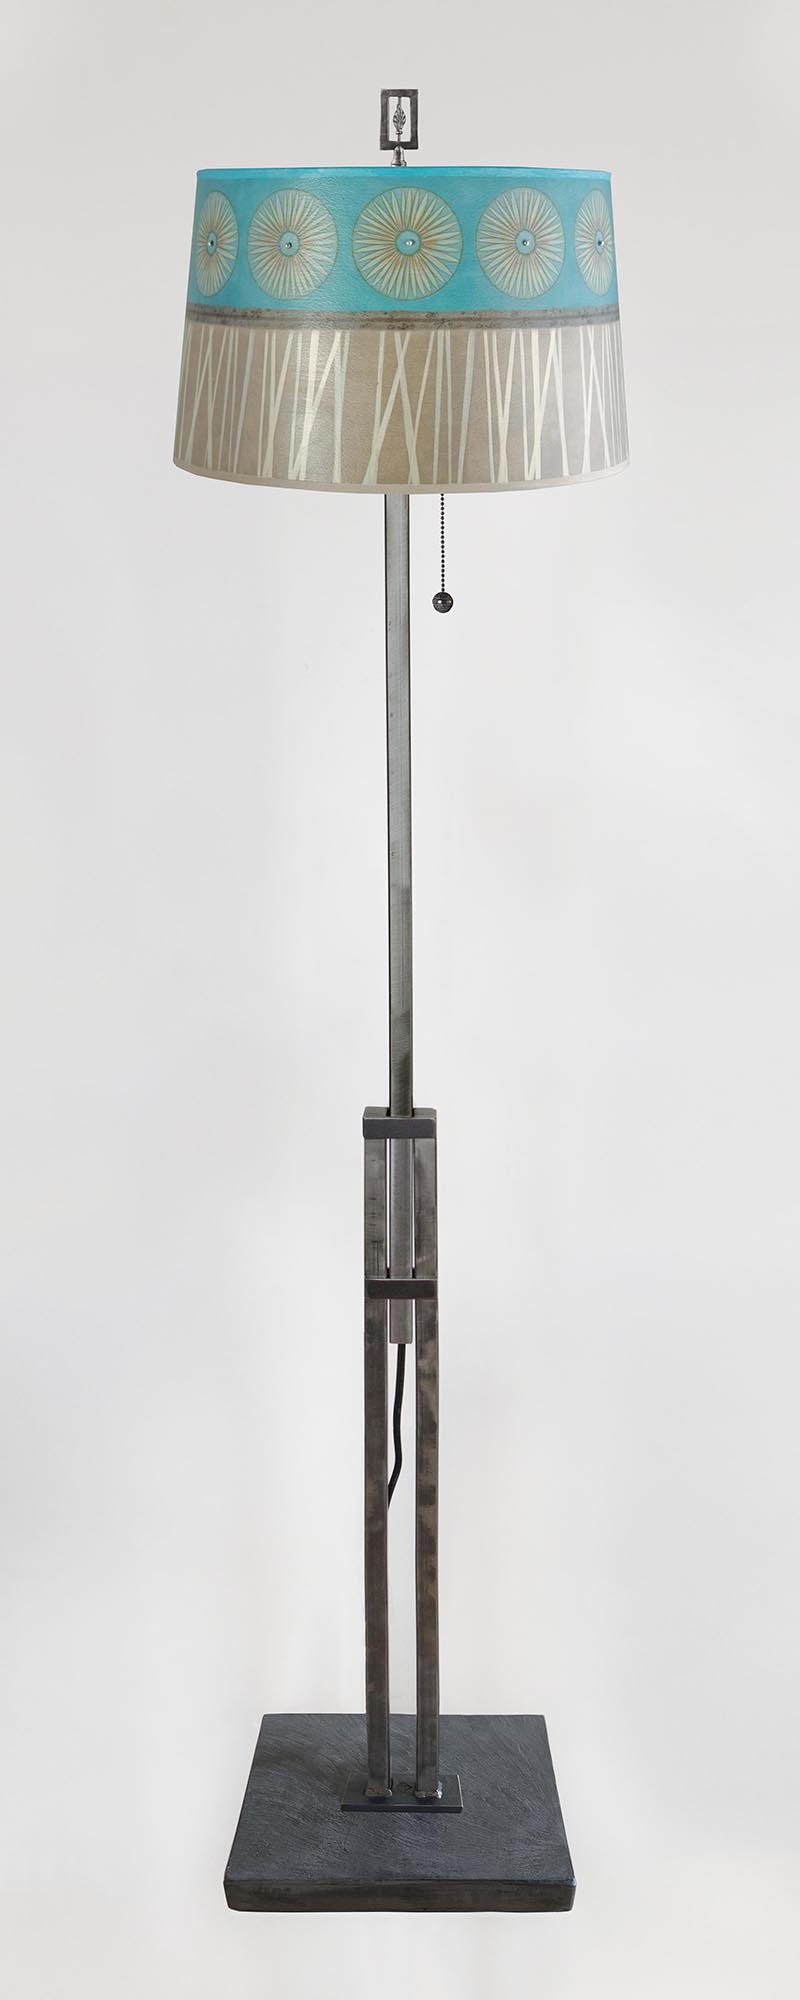 Adjustable-Height Steel Floor Lamp with Large Drum Shade in Pool